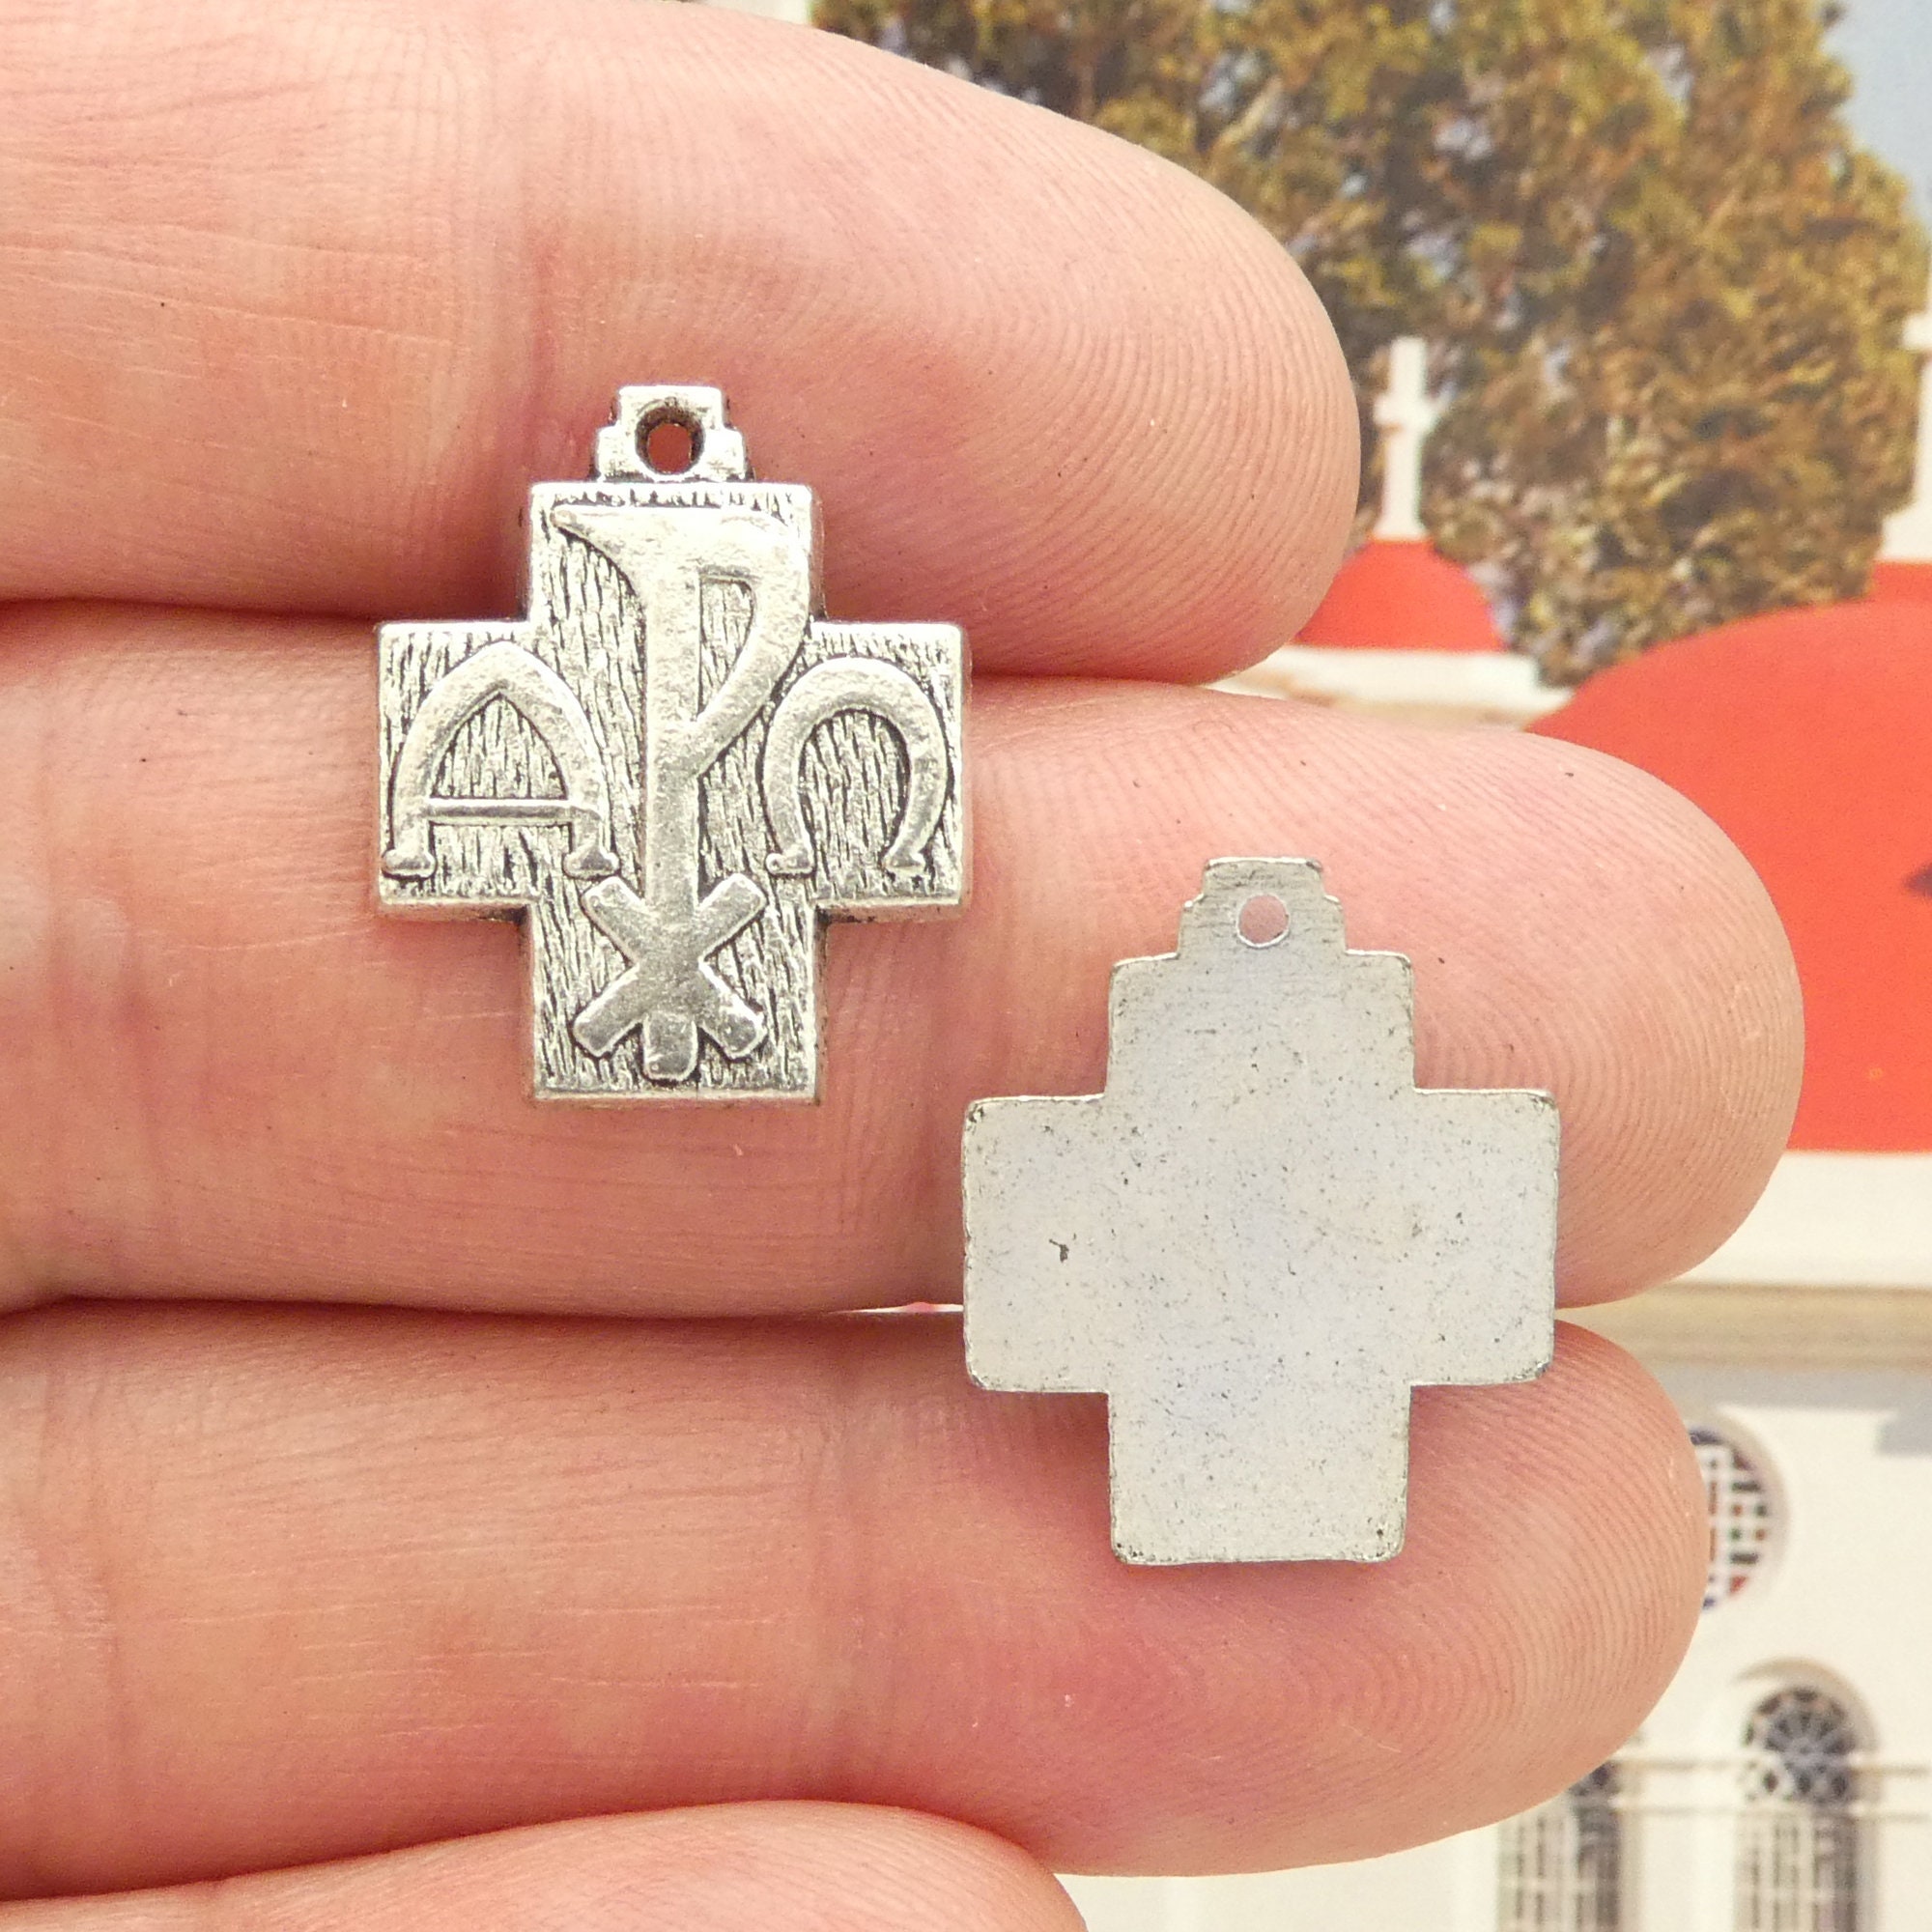 Bulk 30 Orthodox Cross Charm Pendant Silver by TIJC SP2075B